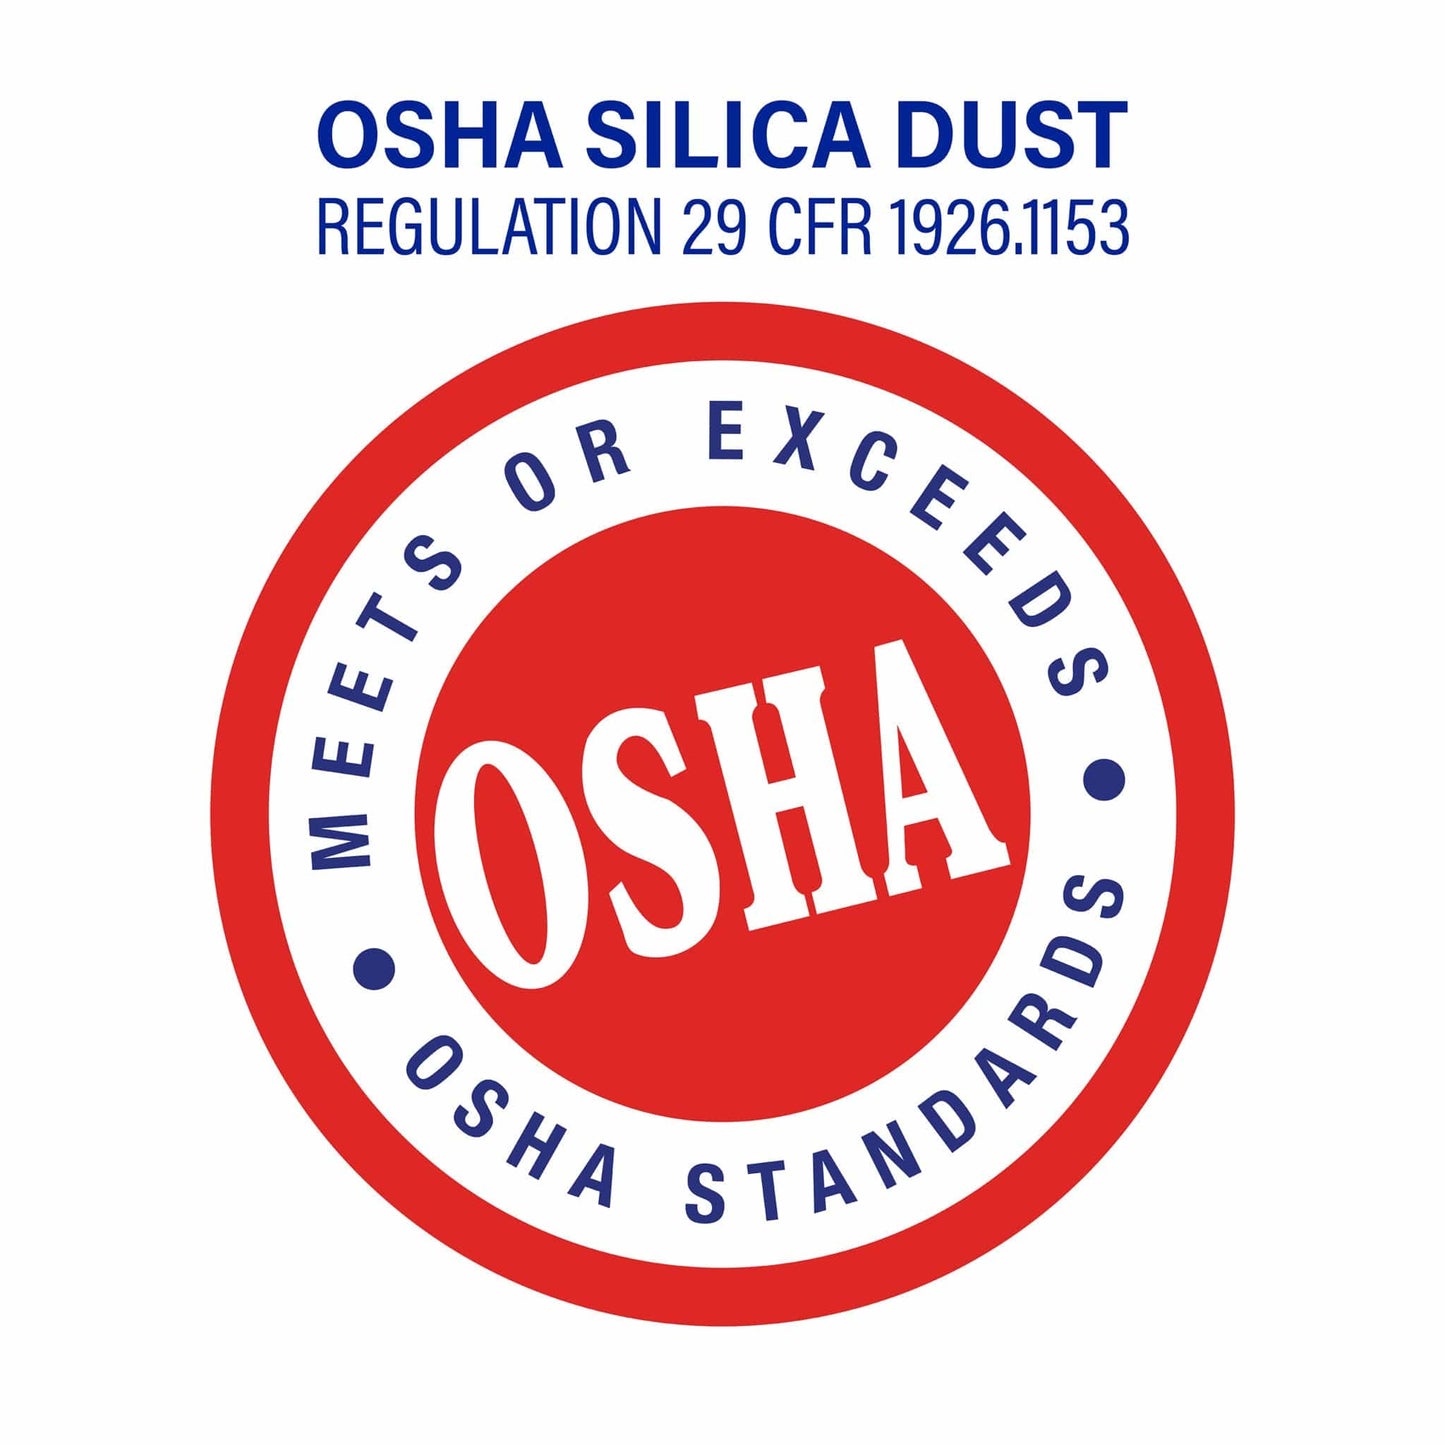 Meets or Exceeds OSHA Silica Dust Regulation 29 CFR 1926.1162